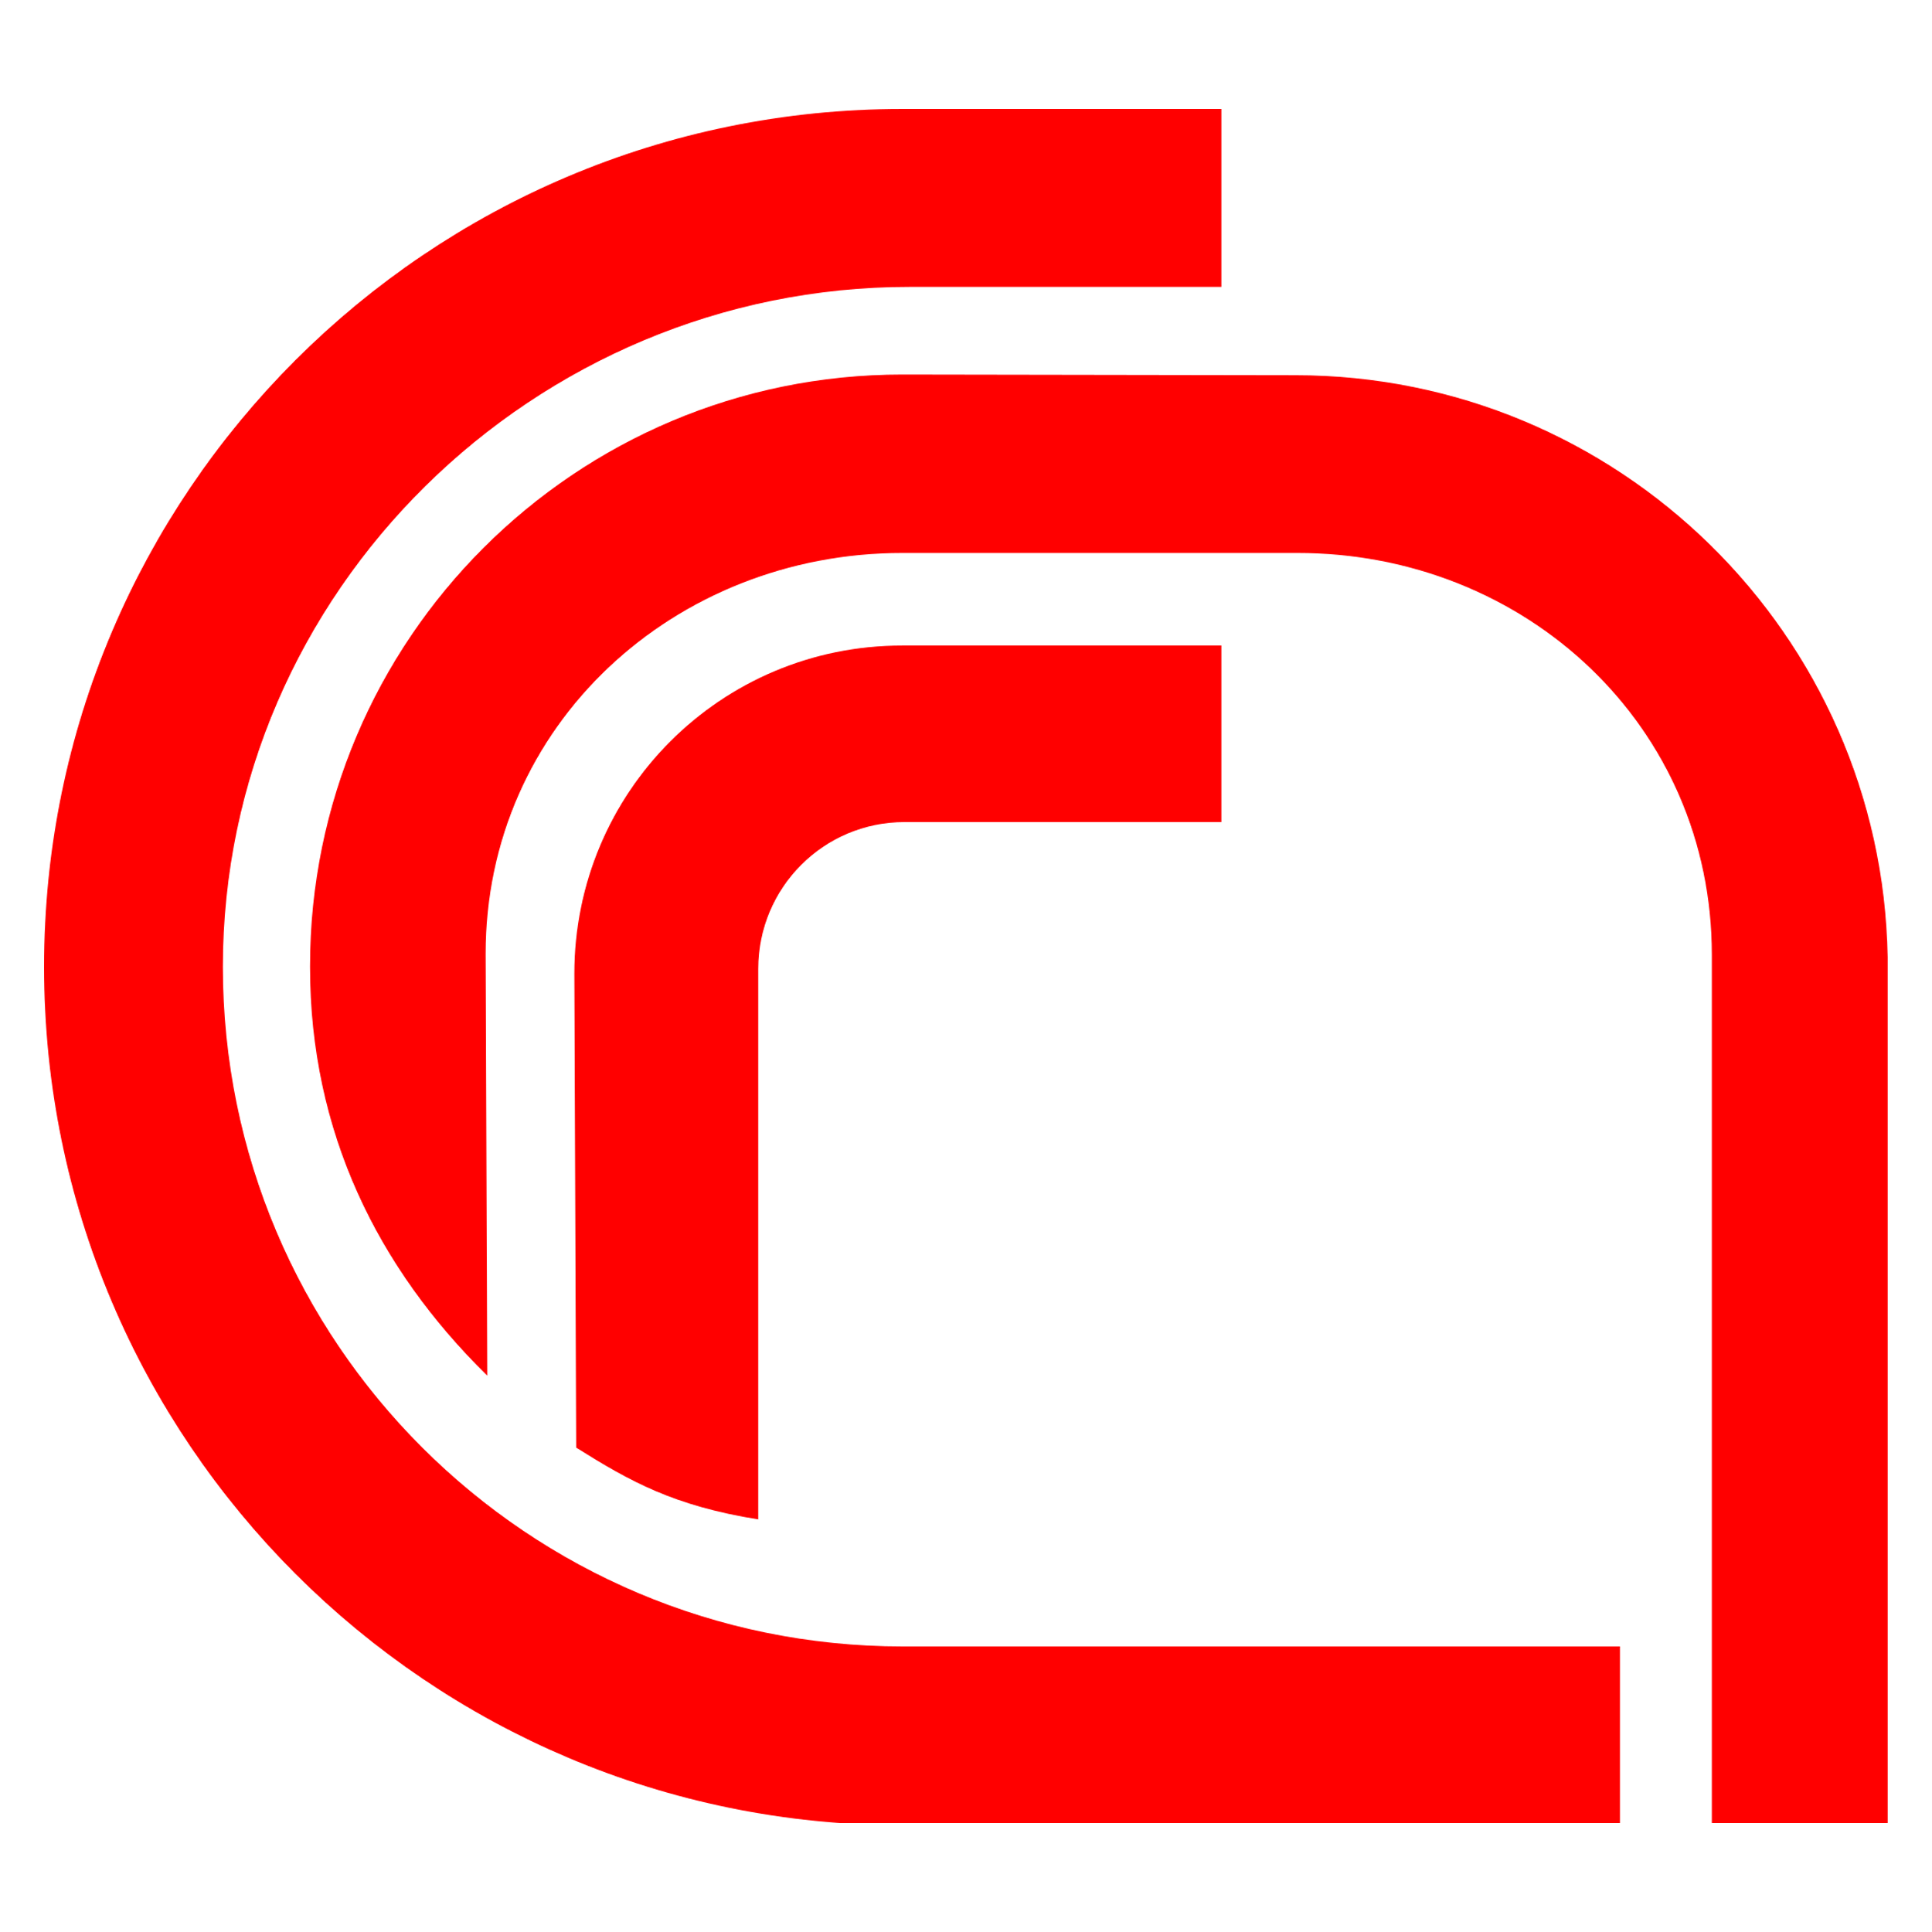 CNR Without Text Logo  Transparent Photo